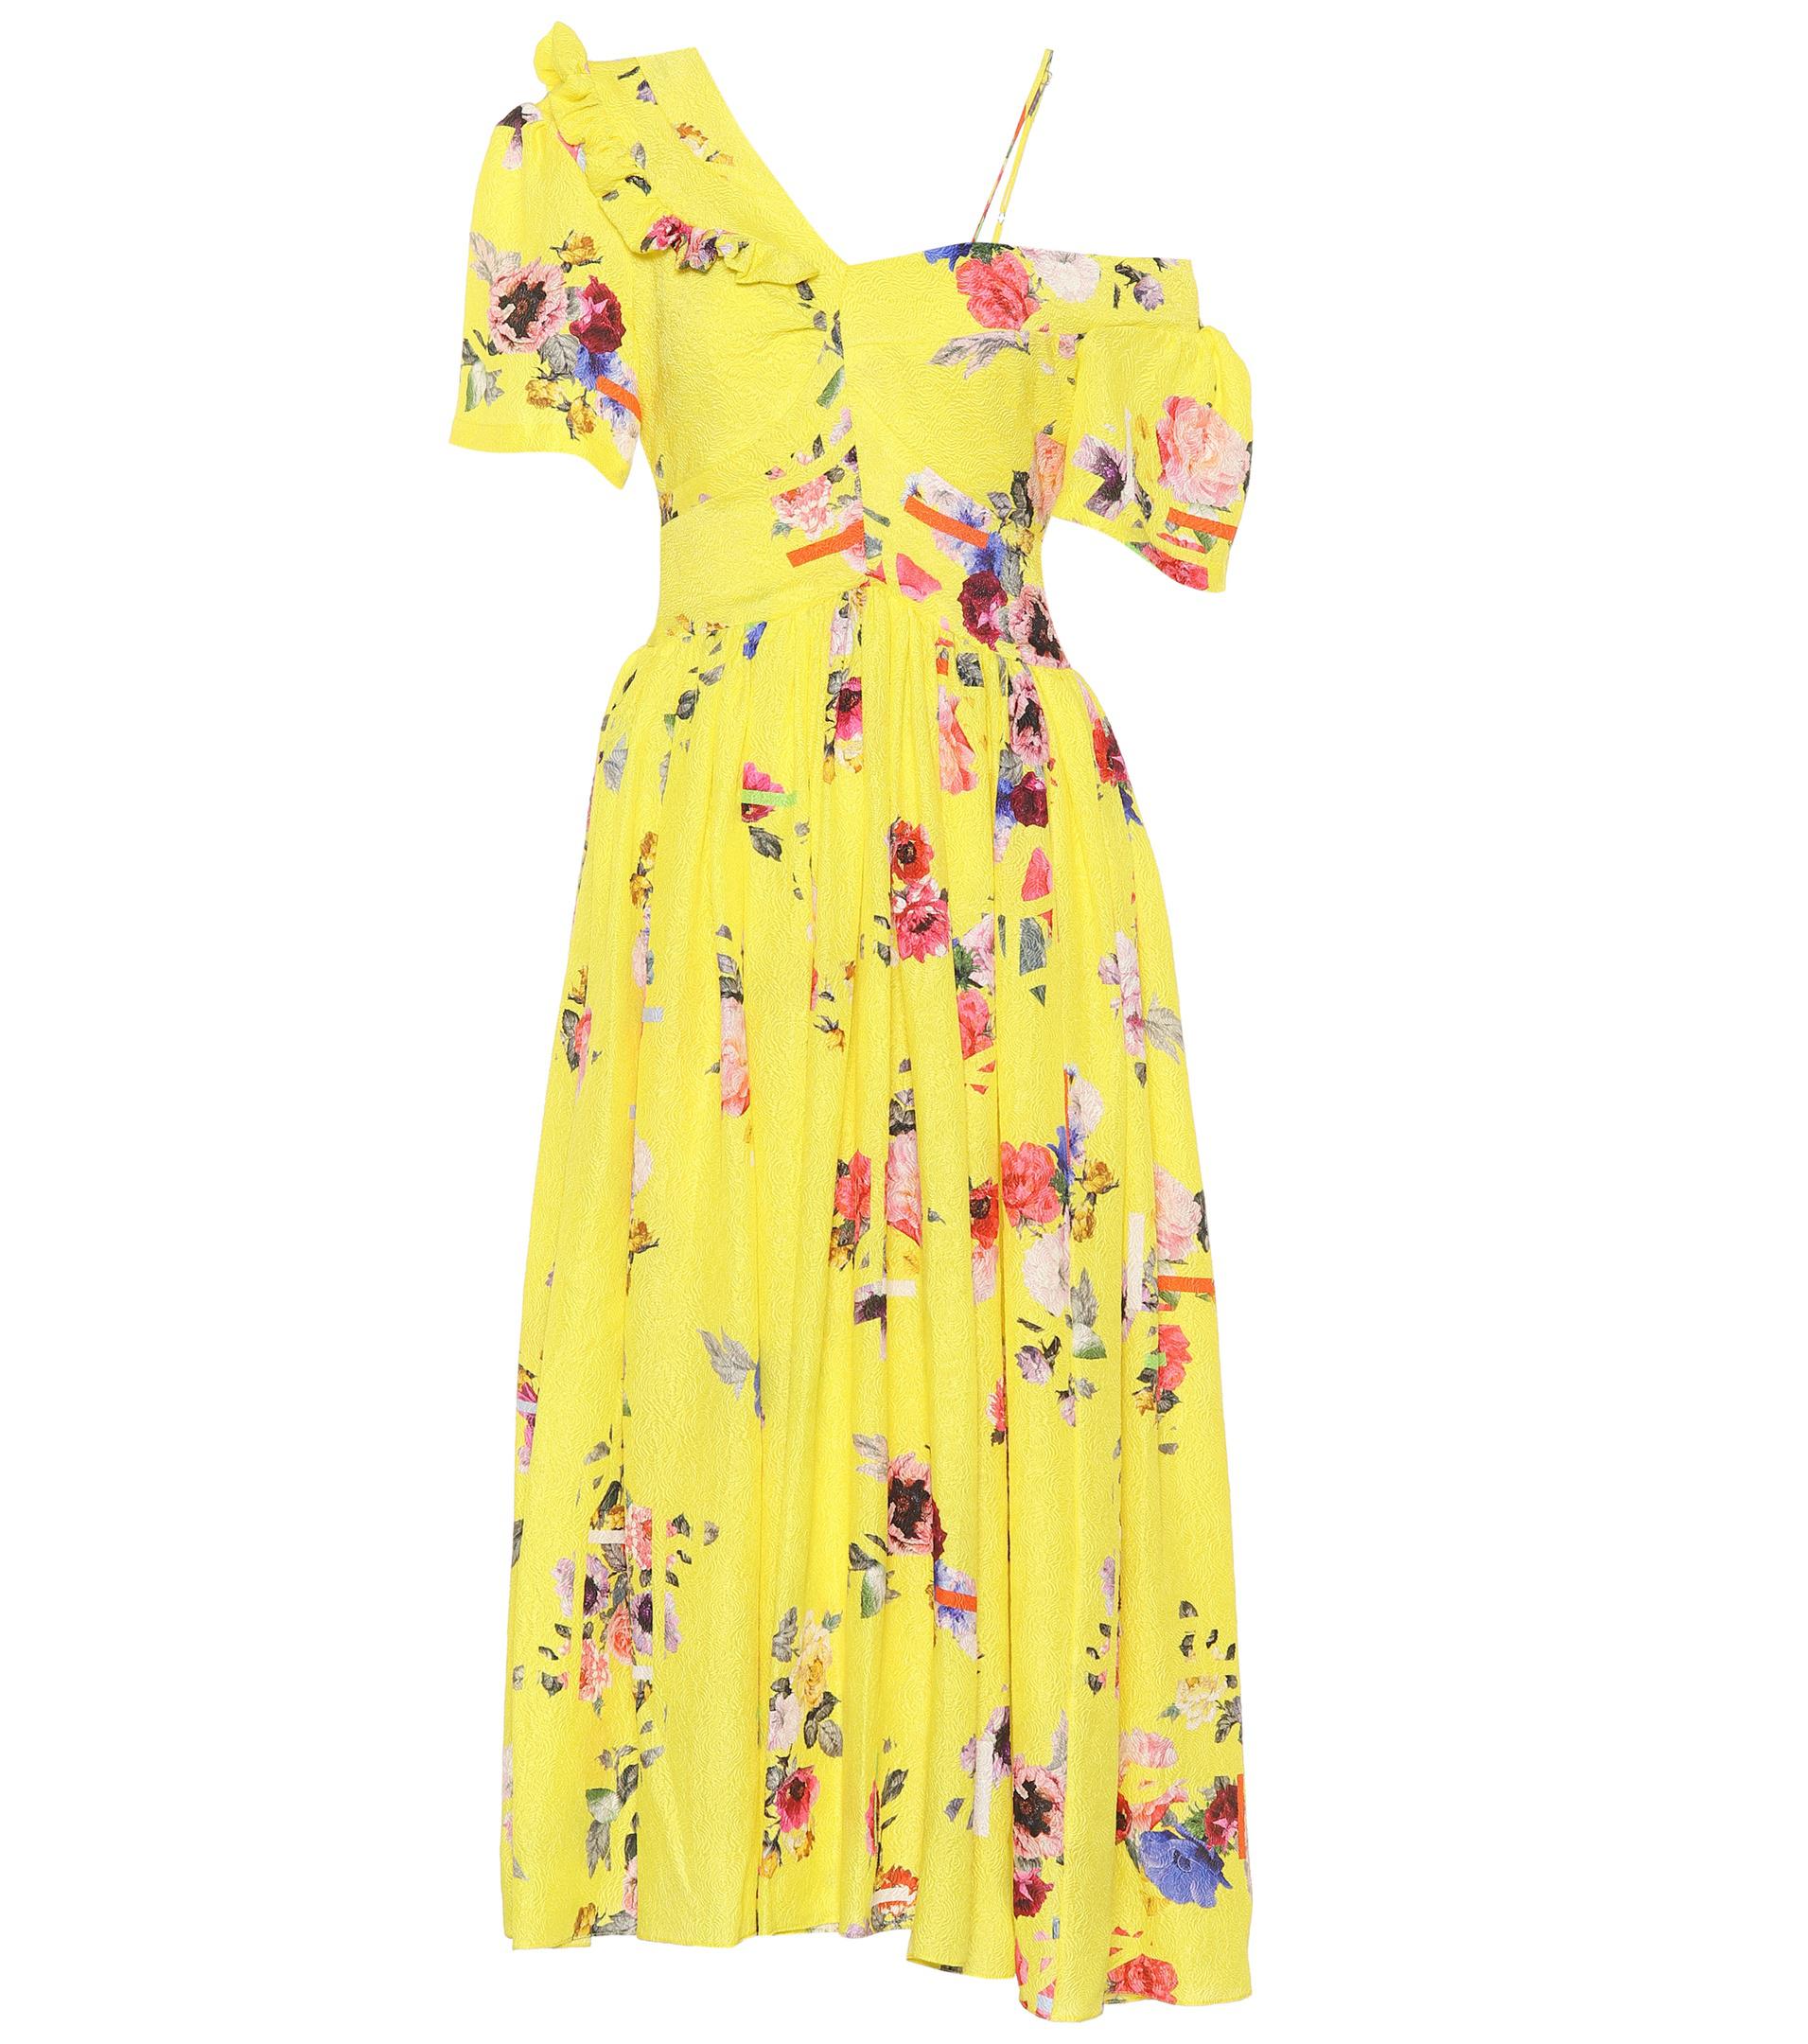 Preen By Thornton Bregazzi Domino Silk-blend Dress in Yellow - Lyst